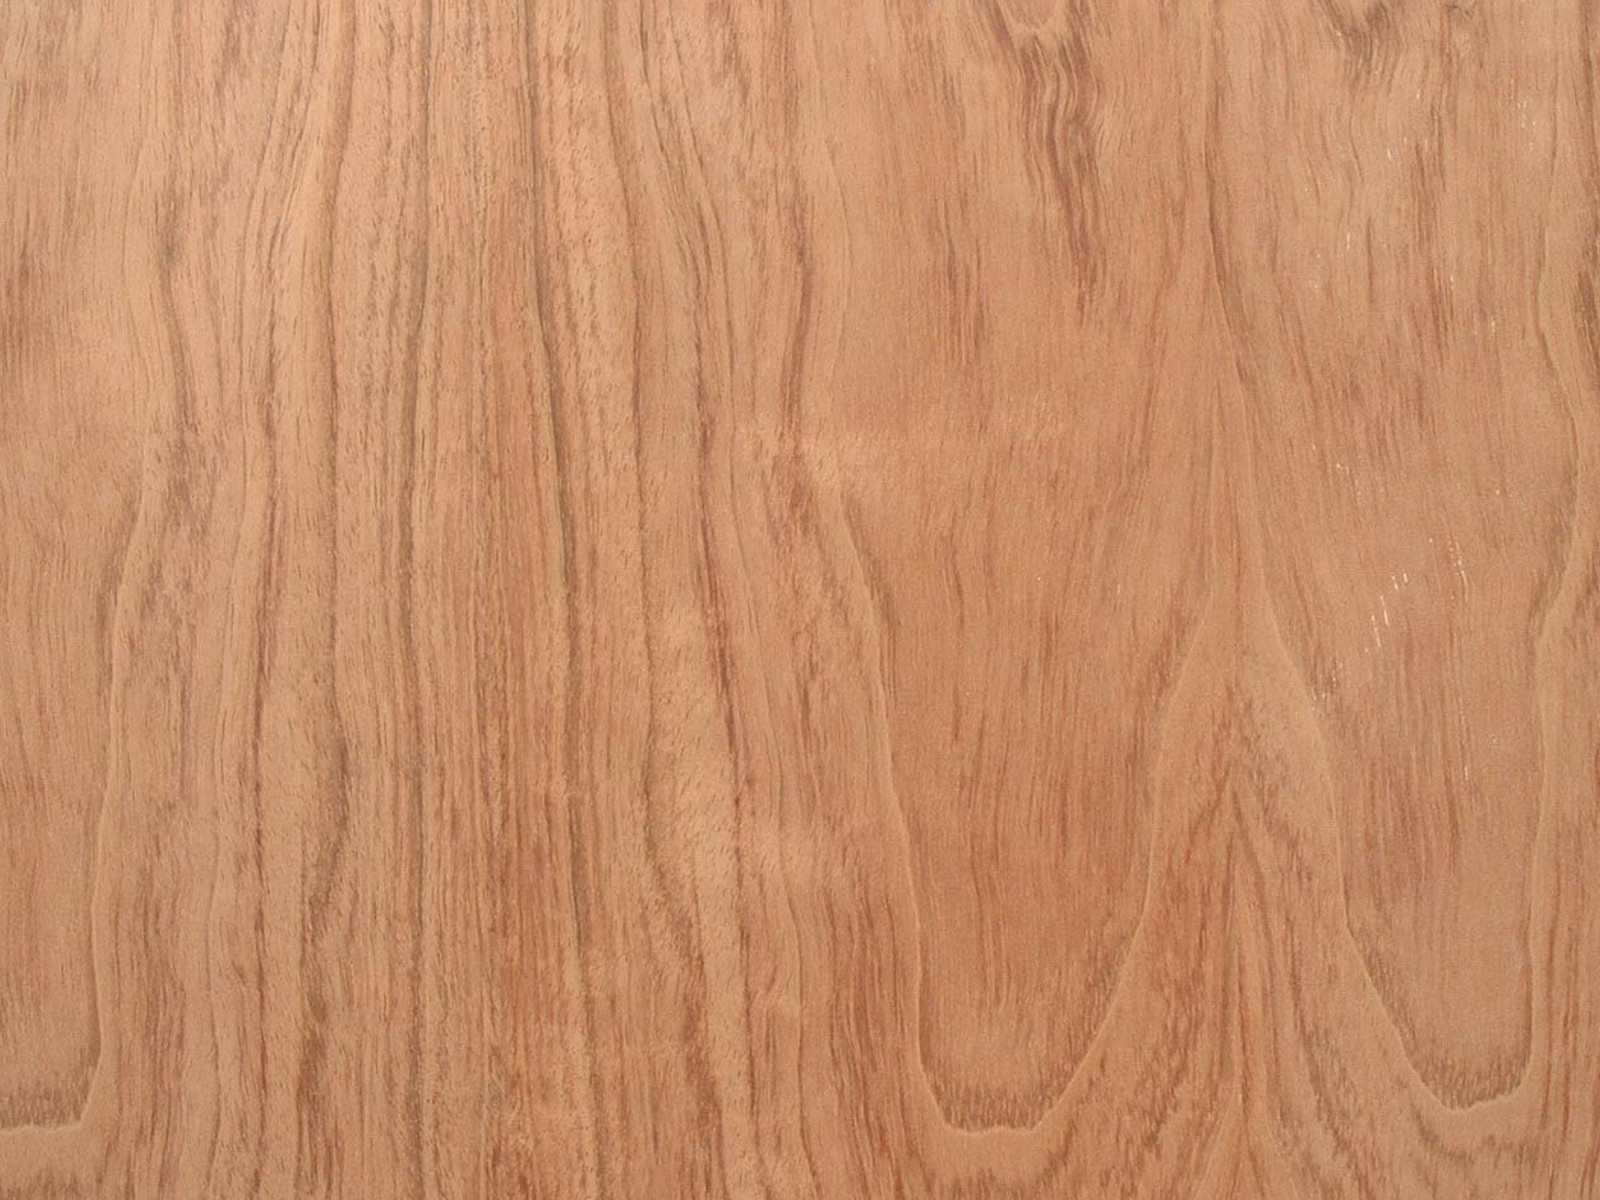 Kewazinga wood Texture.jpg